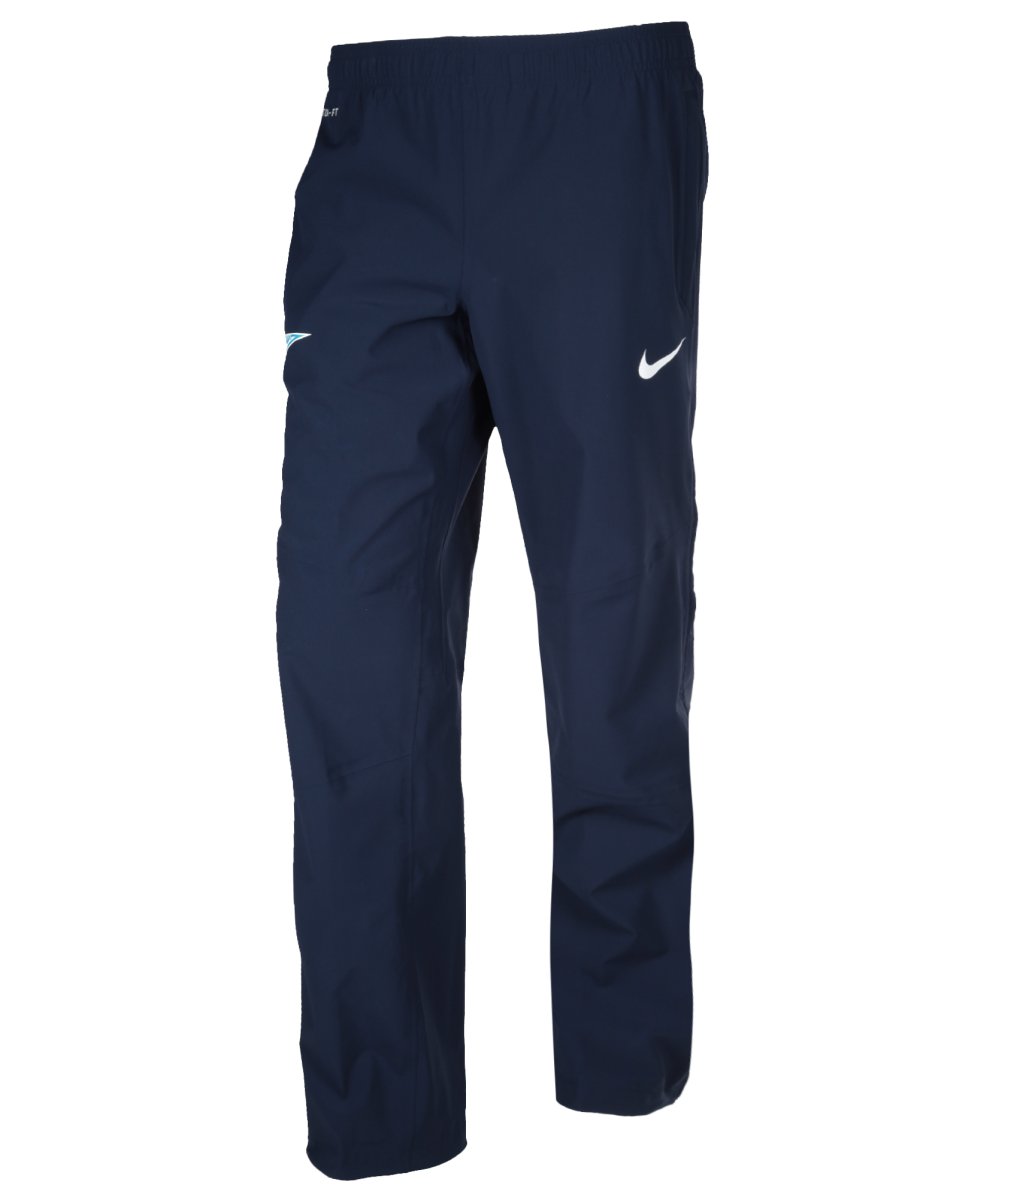 Nike Air men's Woven Pants